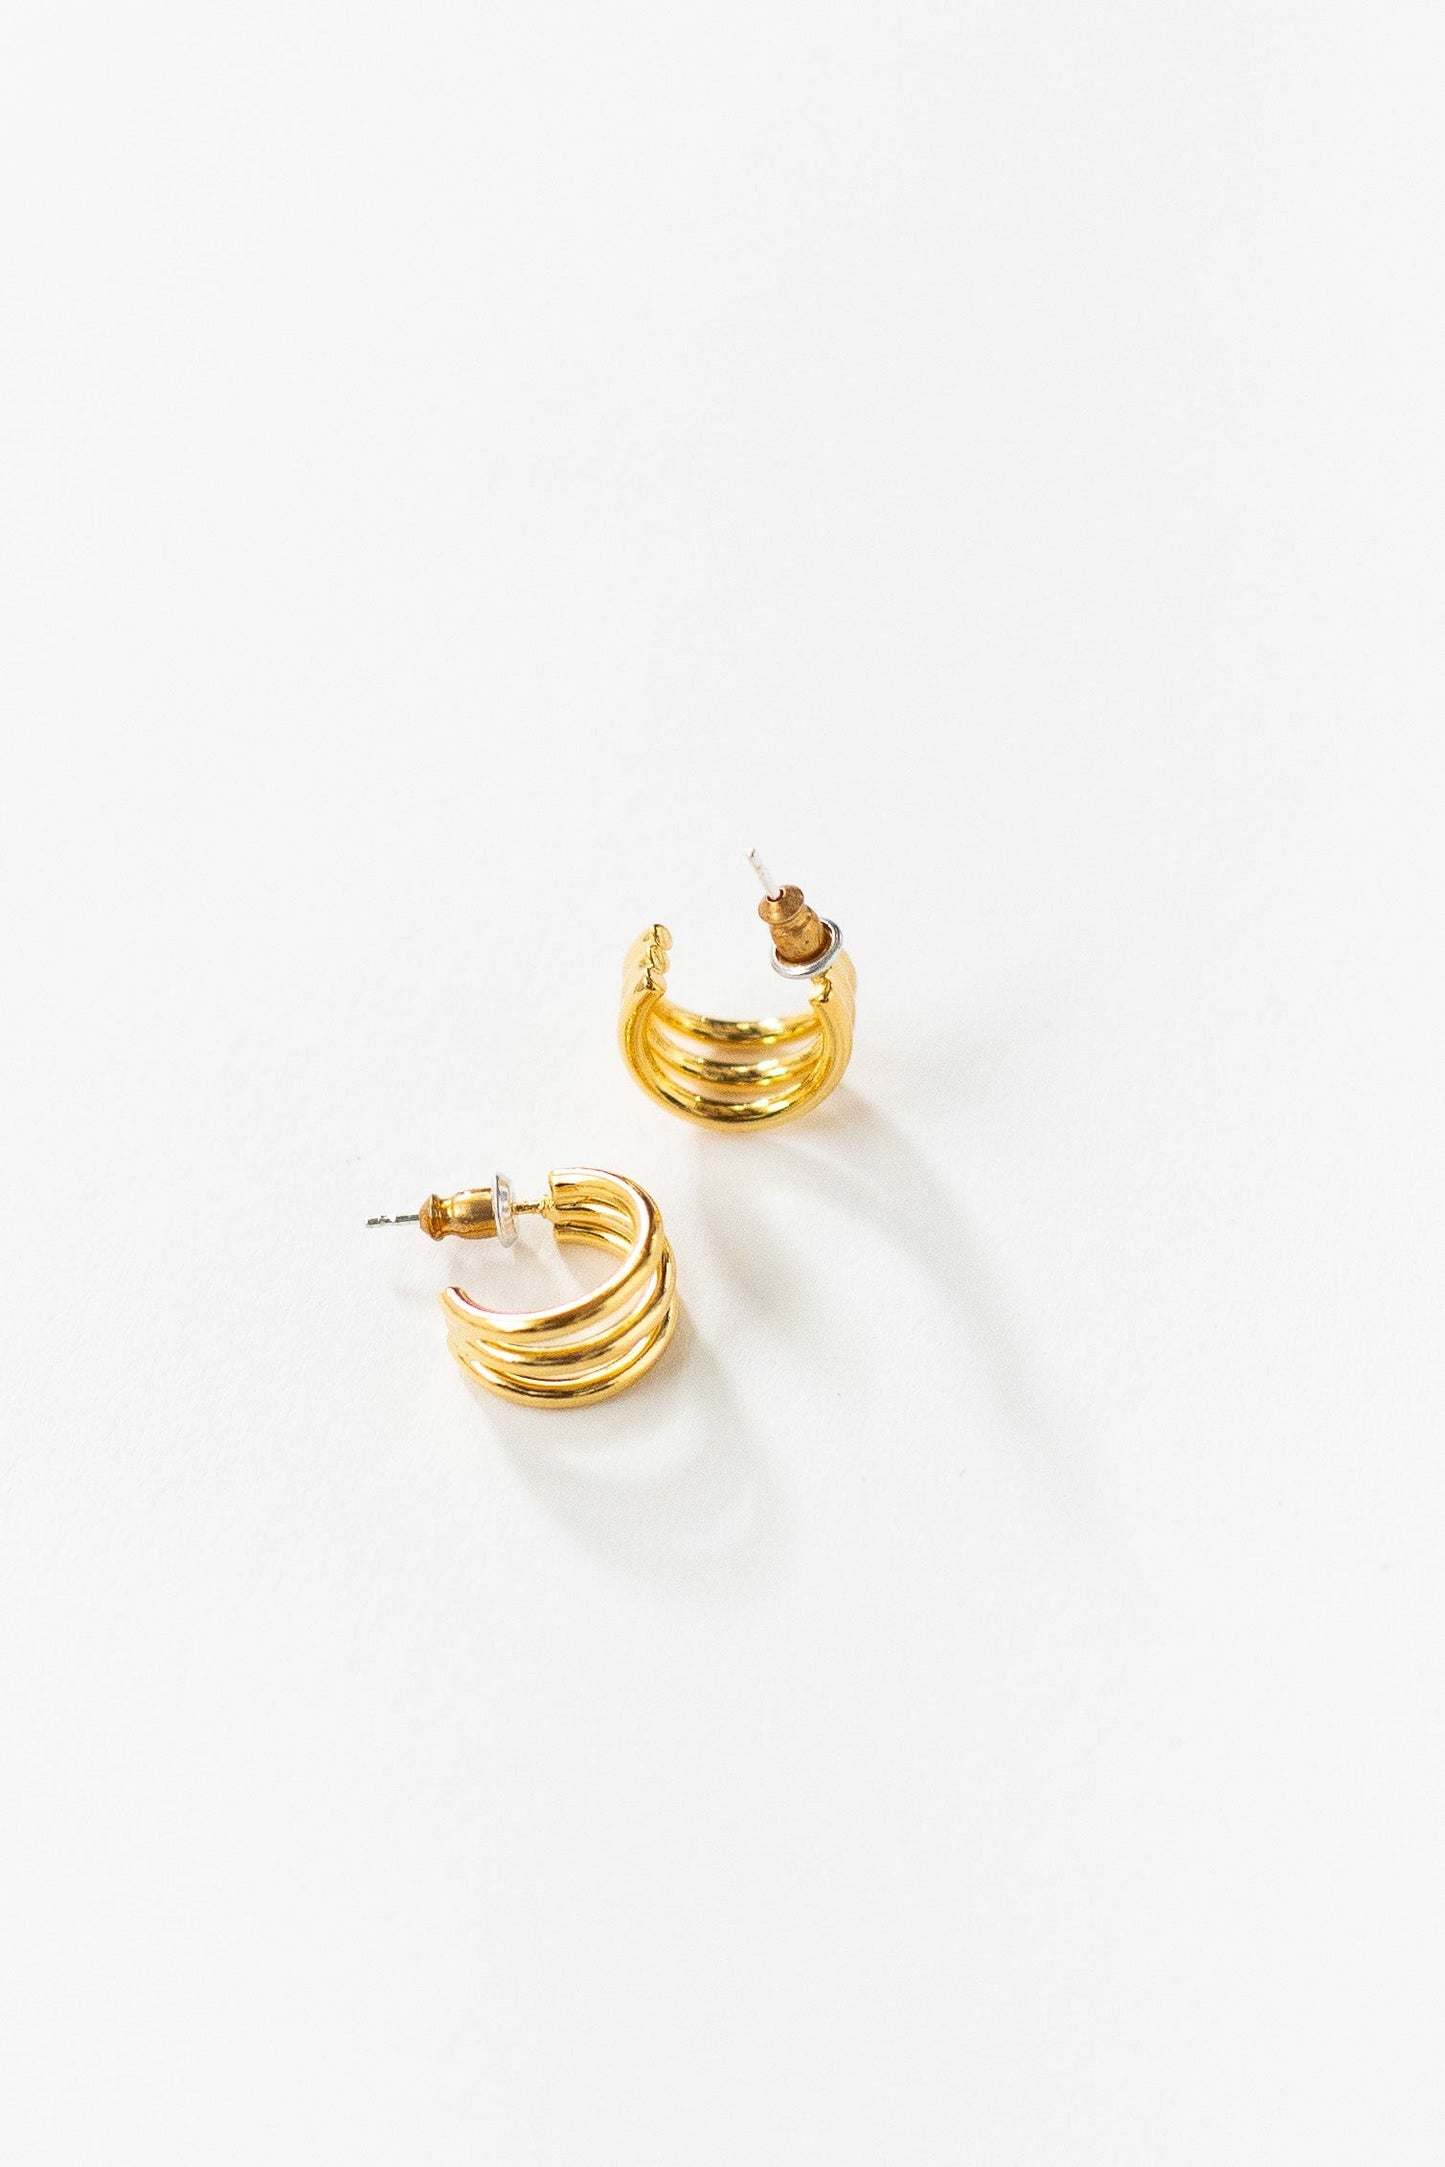 Triple Row Gold Earrings WOMEN'S EARINGS Cove Gold OS 